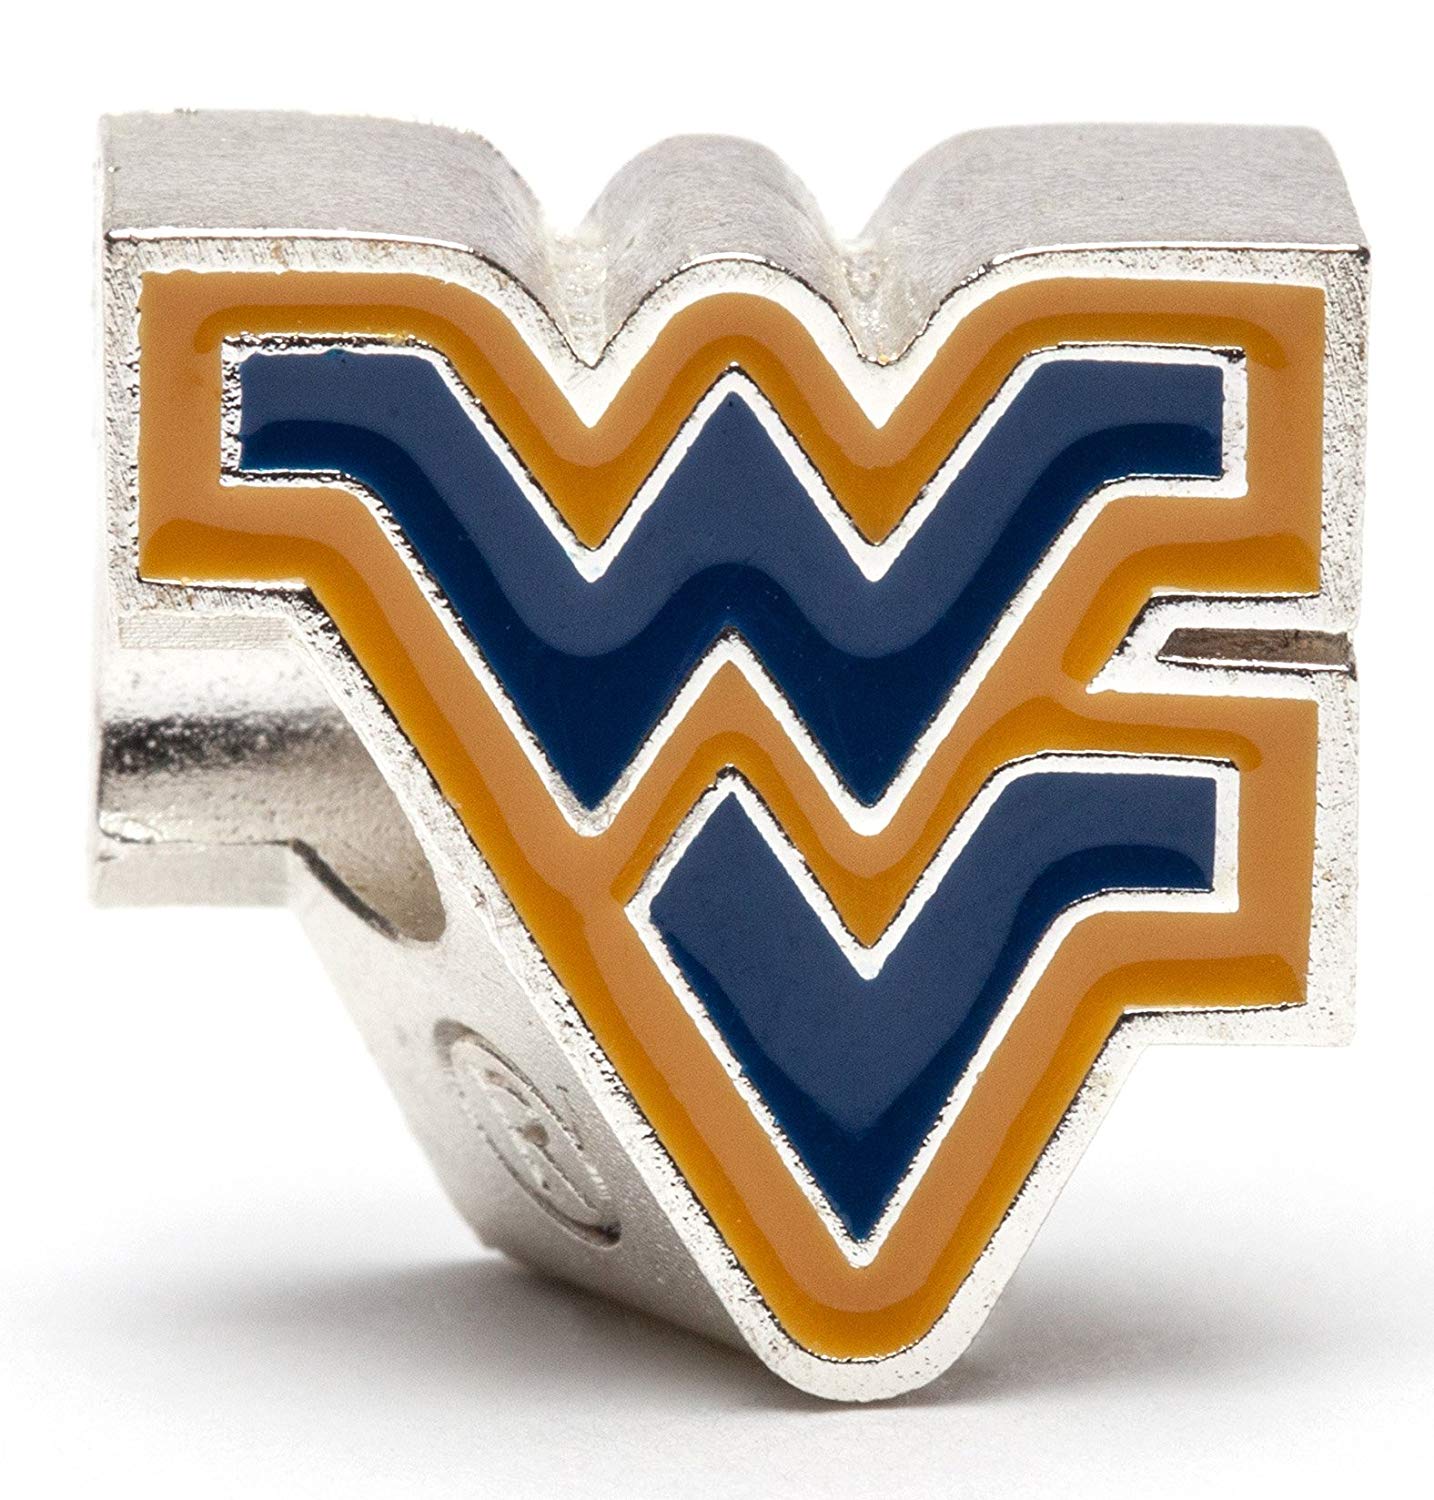 WV Logo - West Virginia University Bead Charm. West Virginia